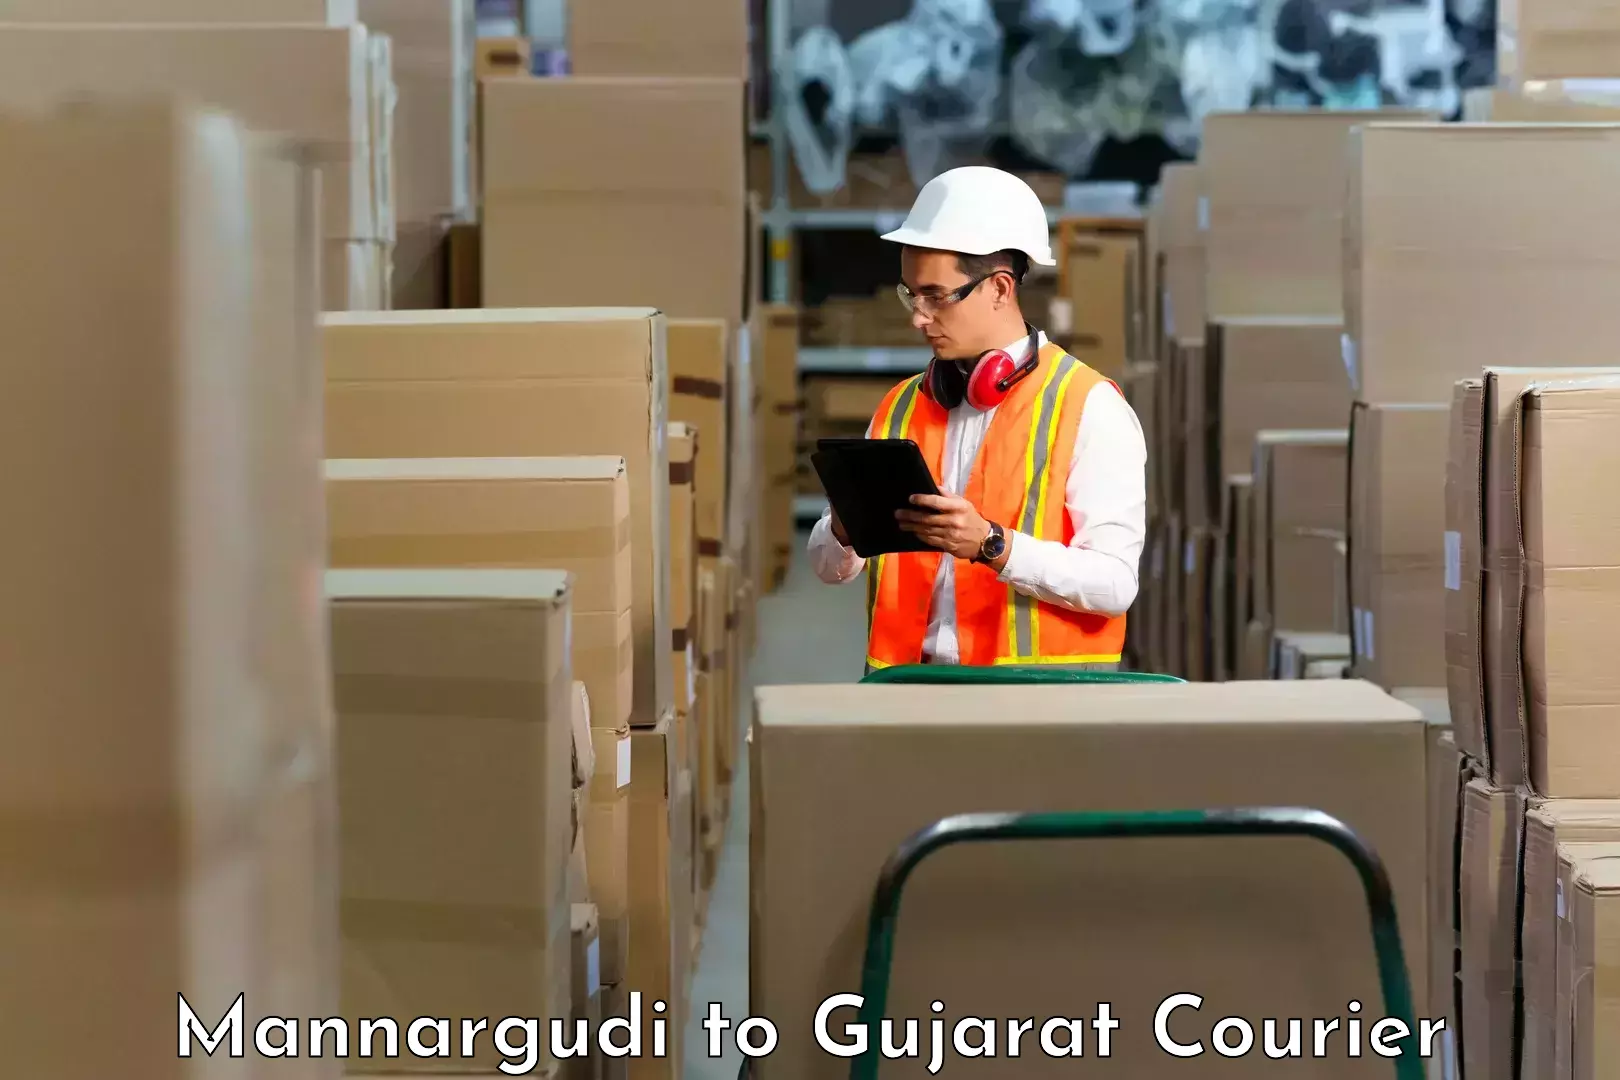 Seamless shipping service Mannargudi to GIDC